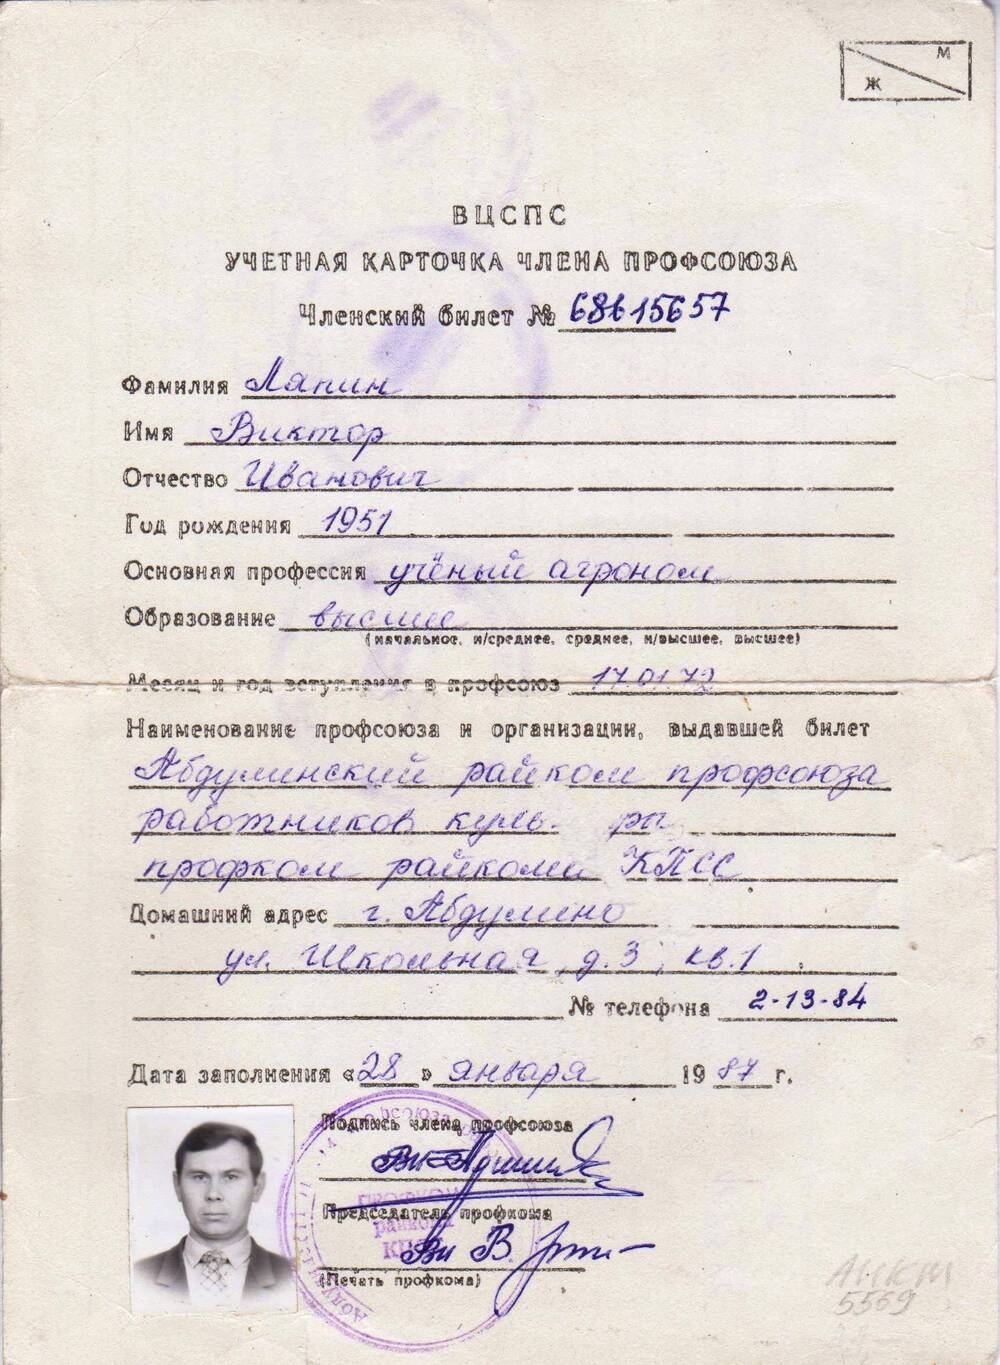 Учетная карточка члена профсоюза. Членский билет №68615657 Ляпина  Виктора Ивановича